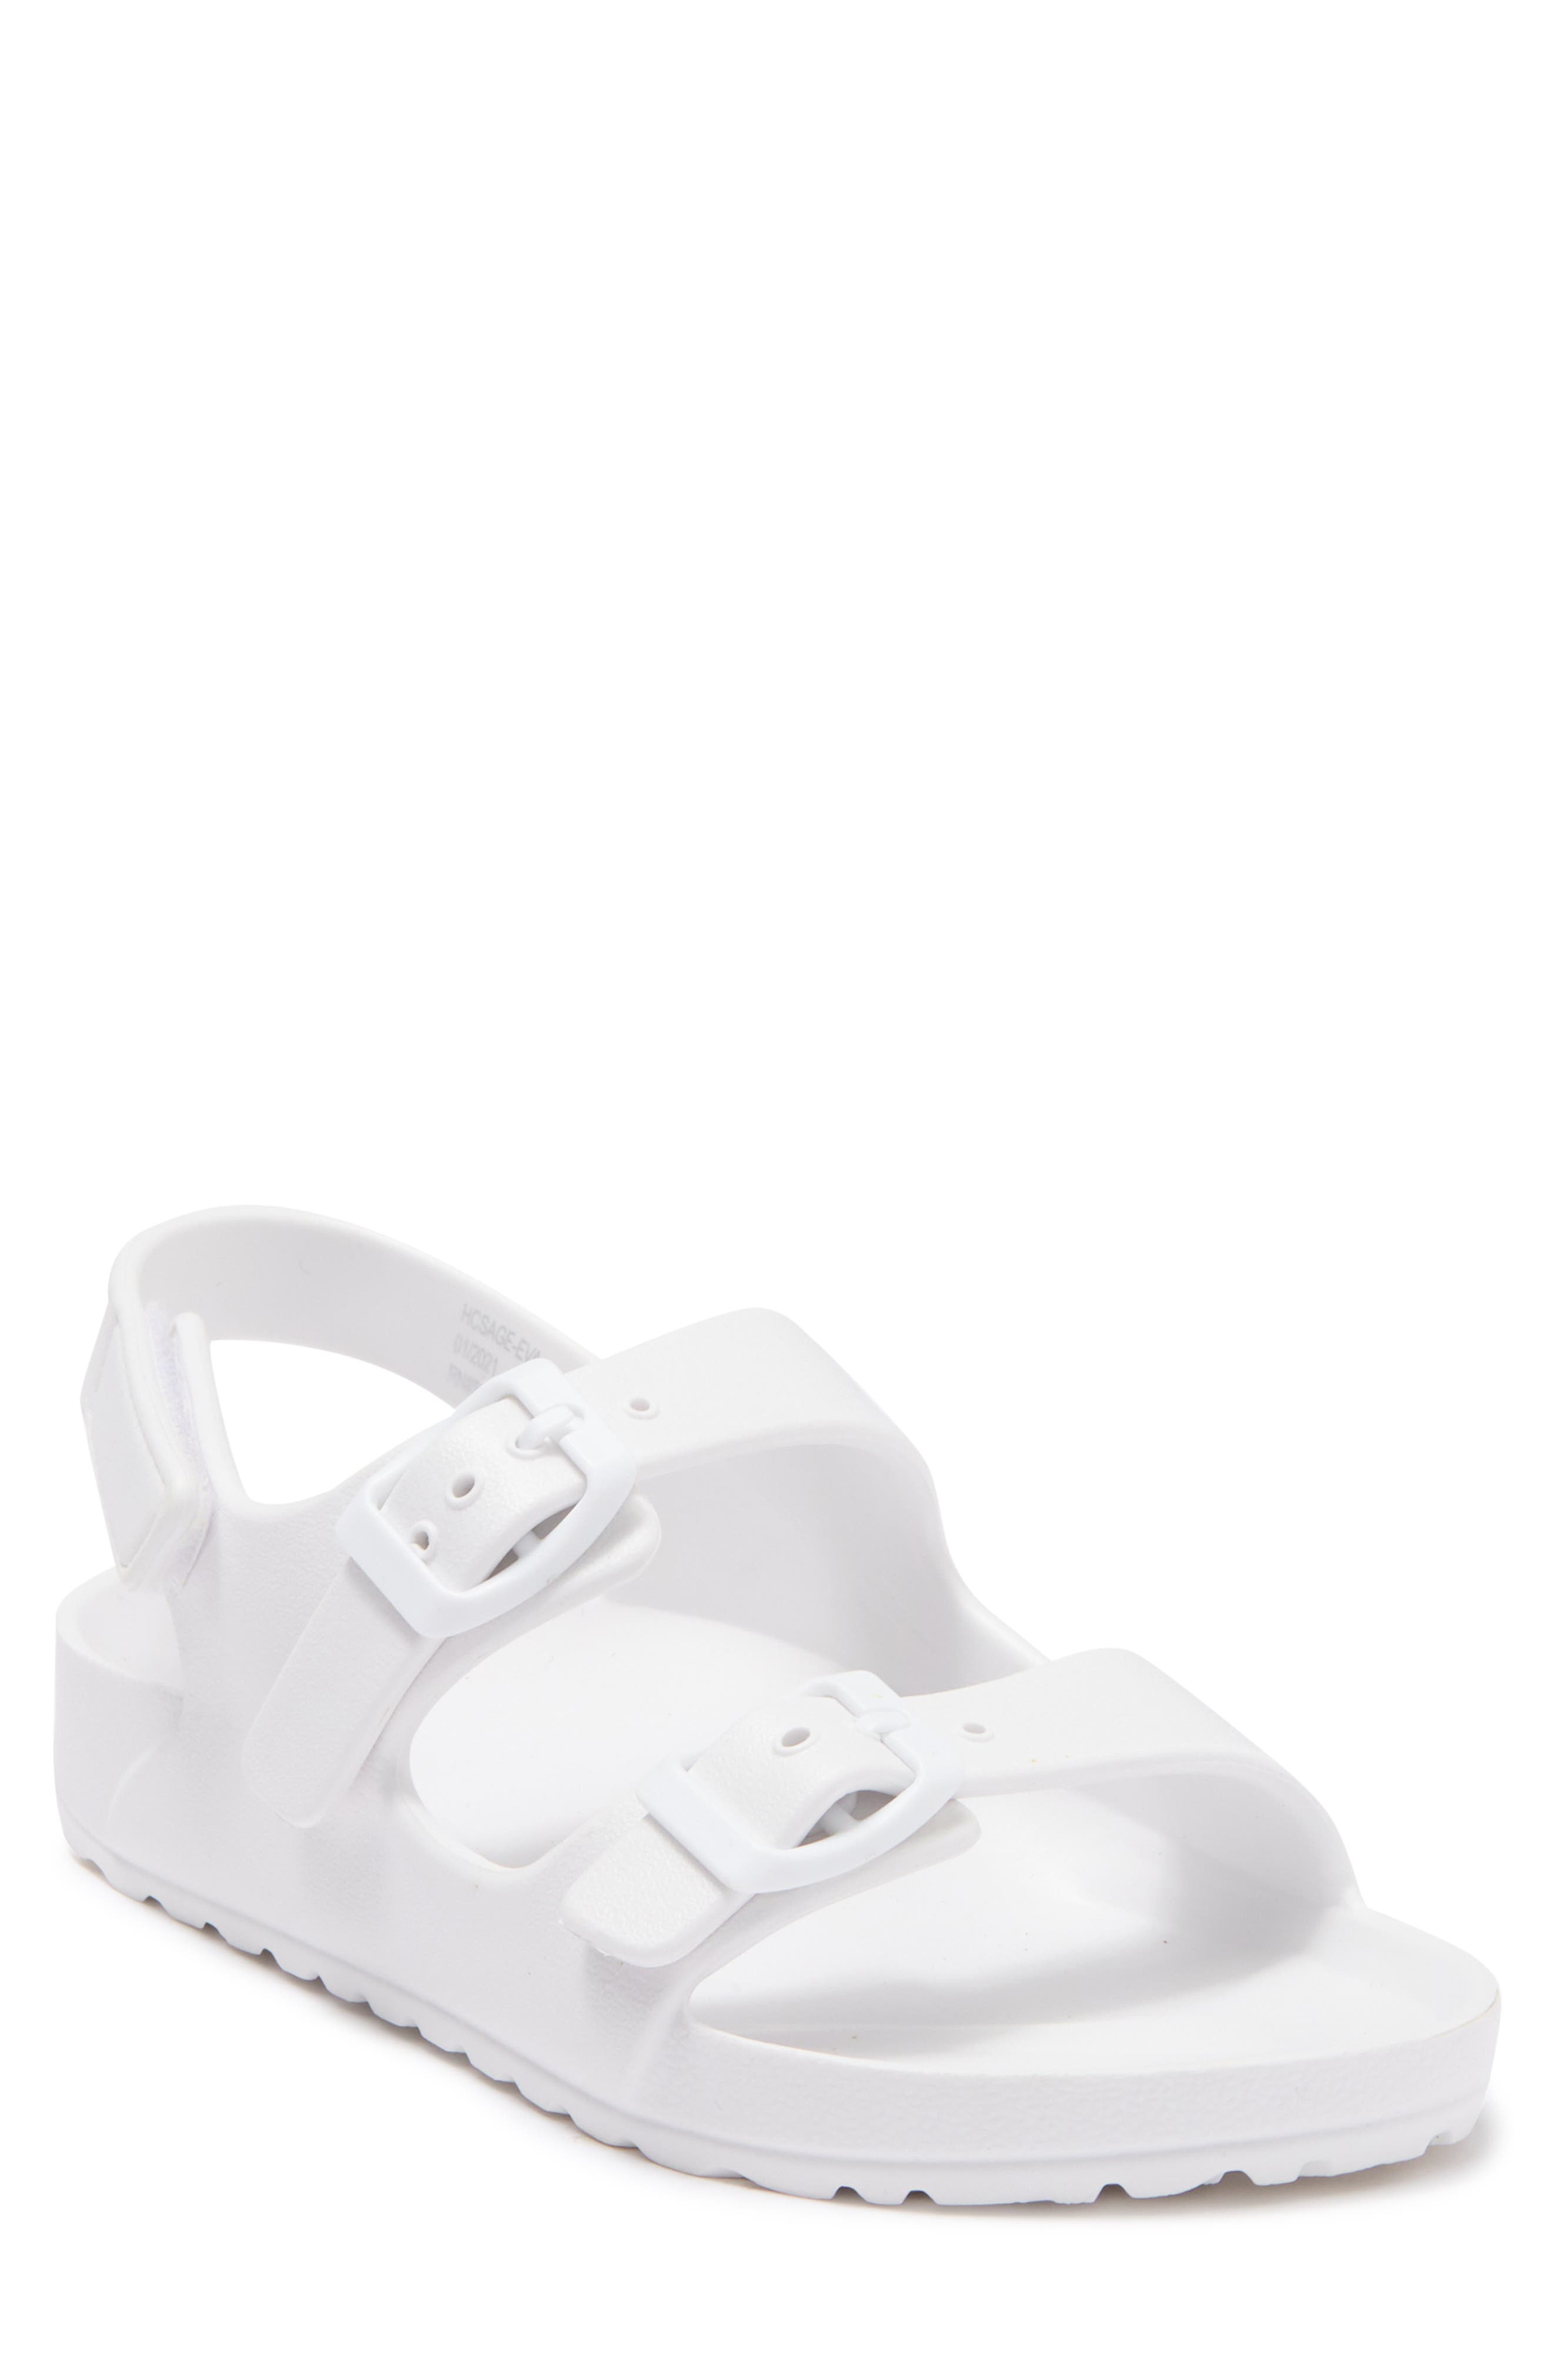 Harper Canyon Kids' Sage Buckled Sandal In White